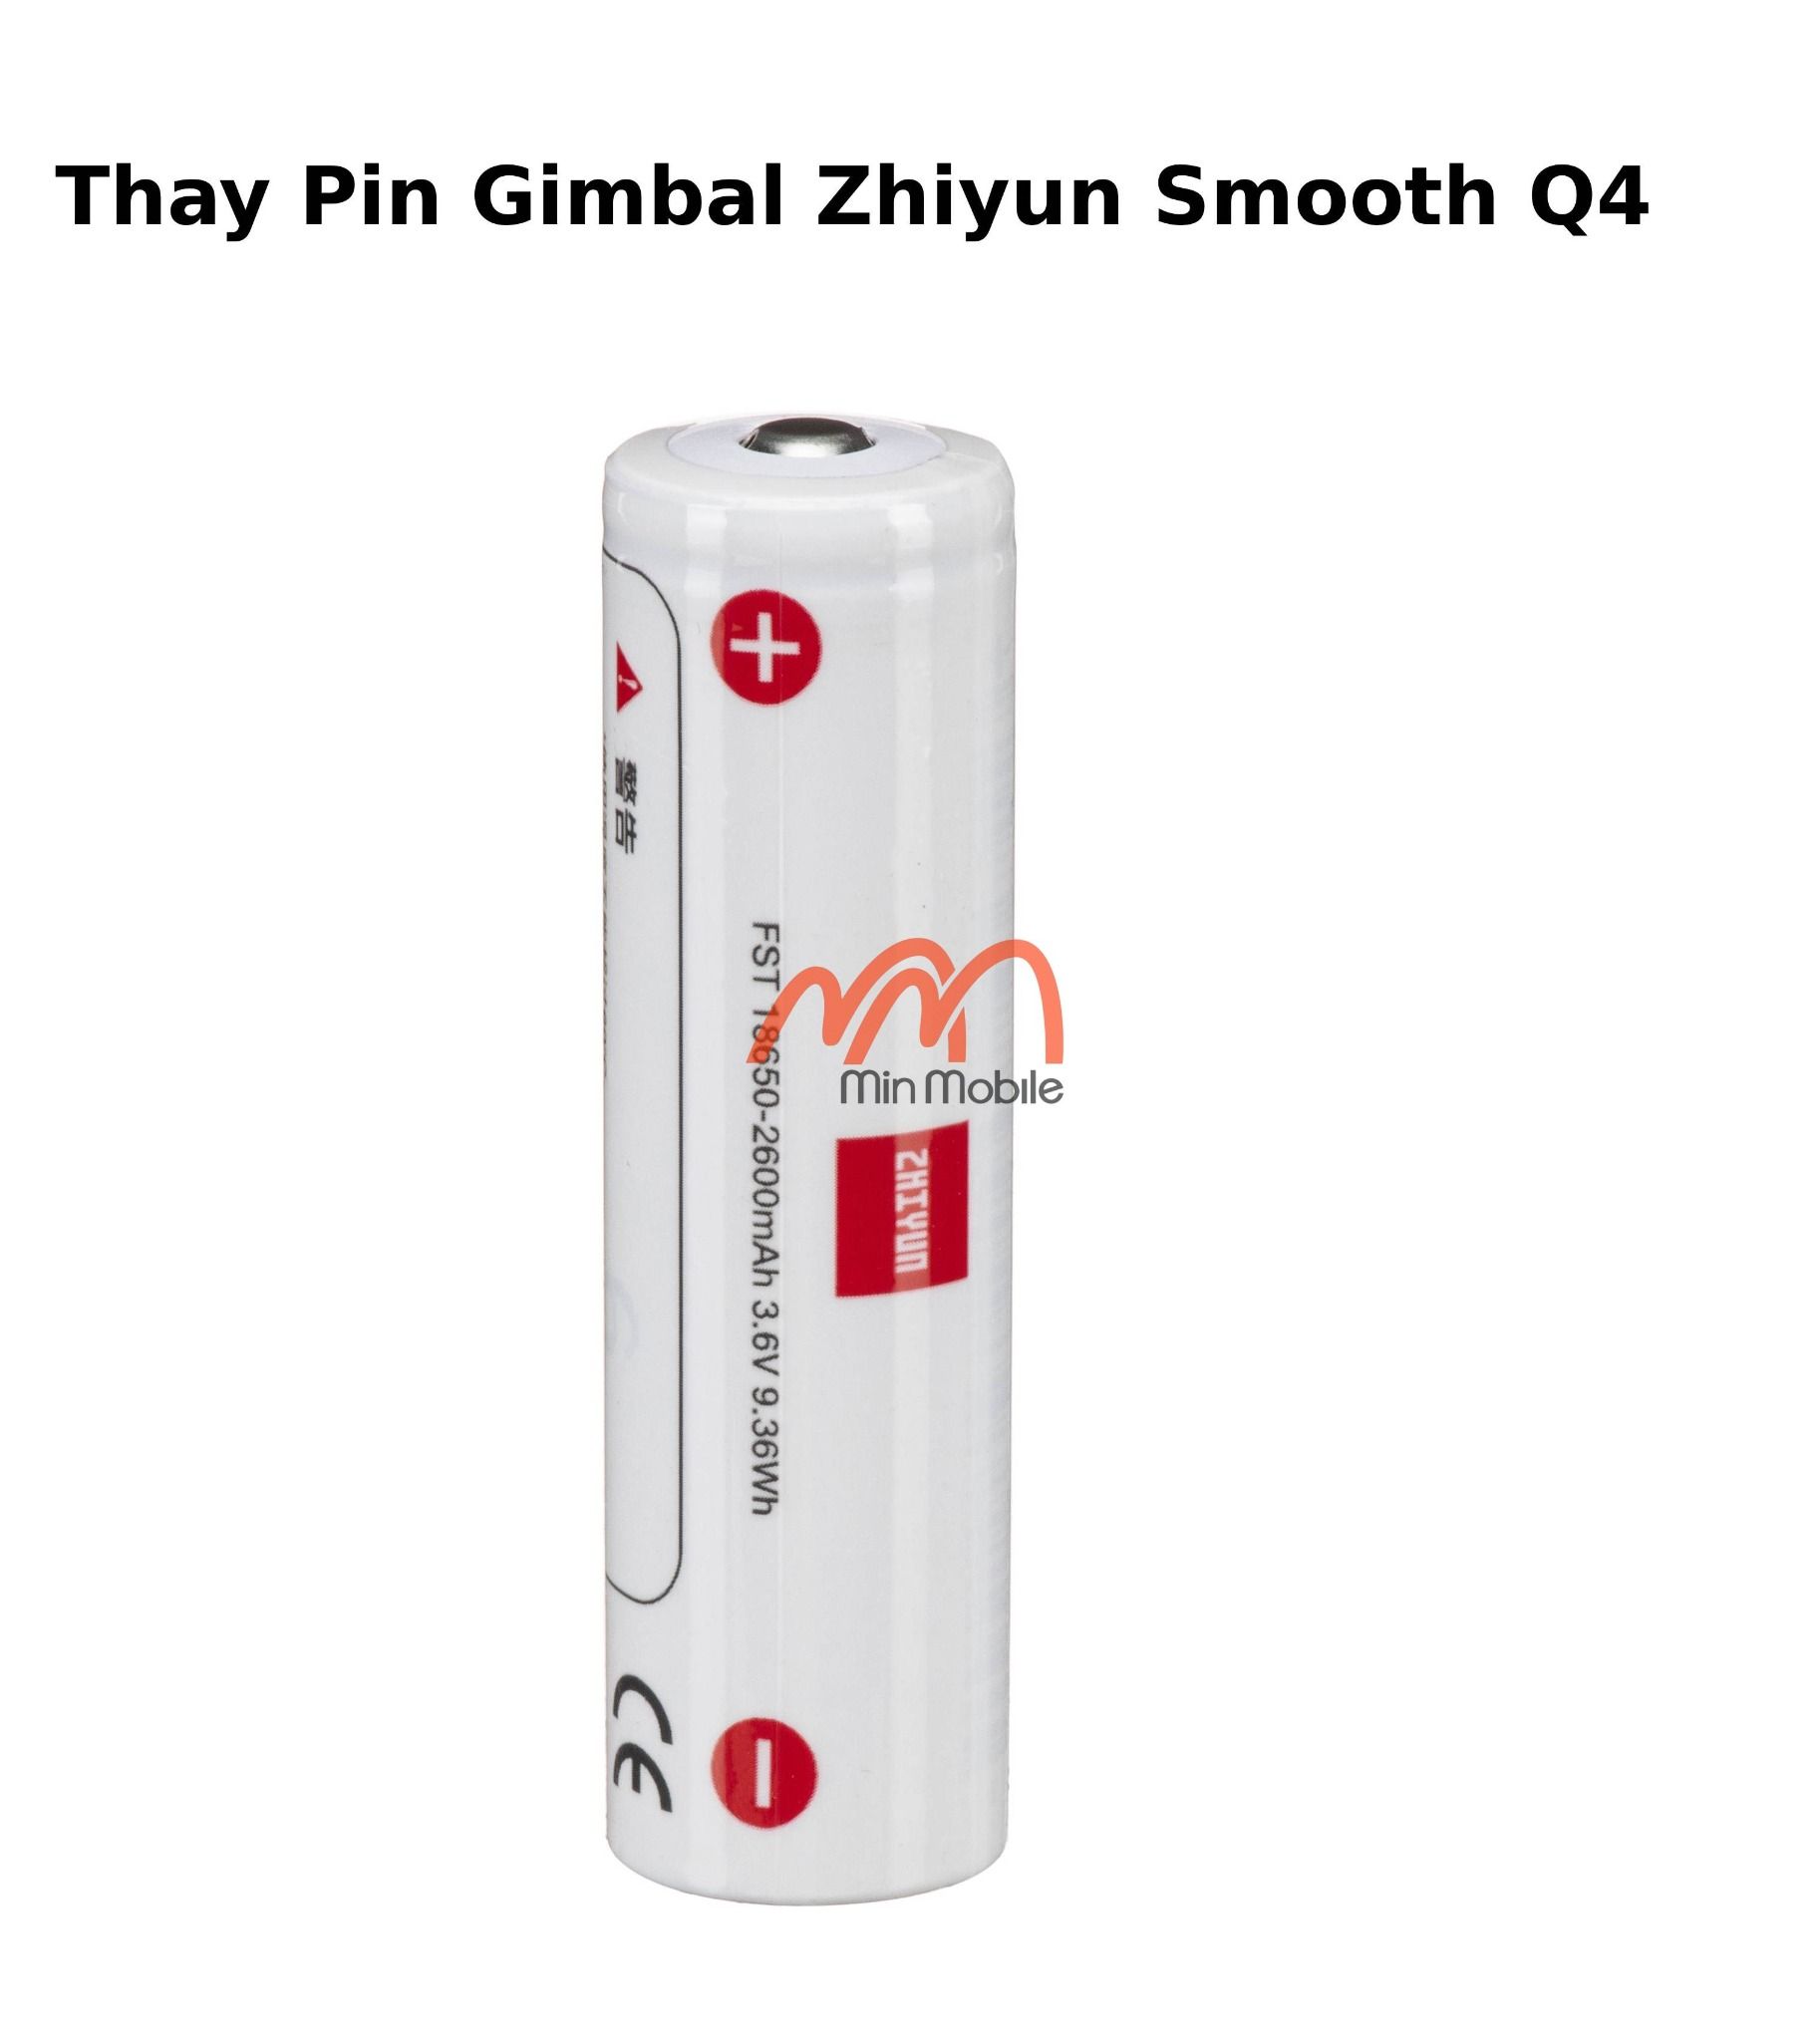 Thay Pin Gimbal Zhiyun Smooth Q4